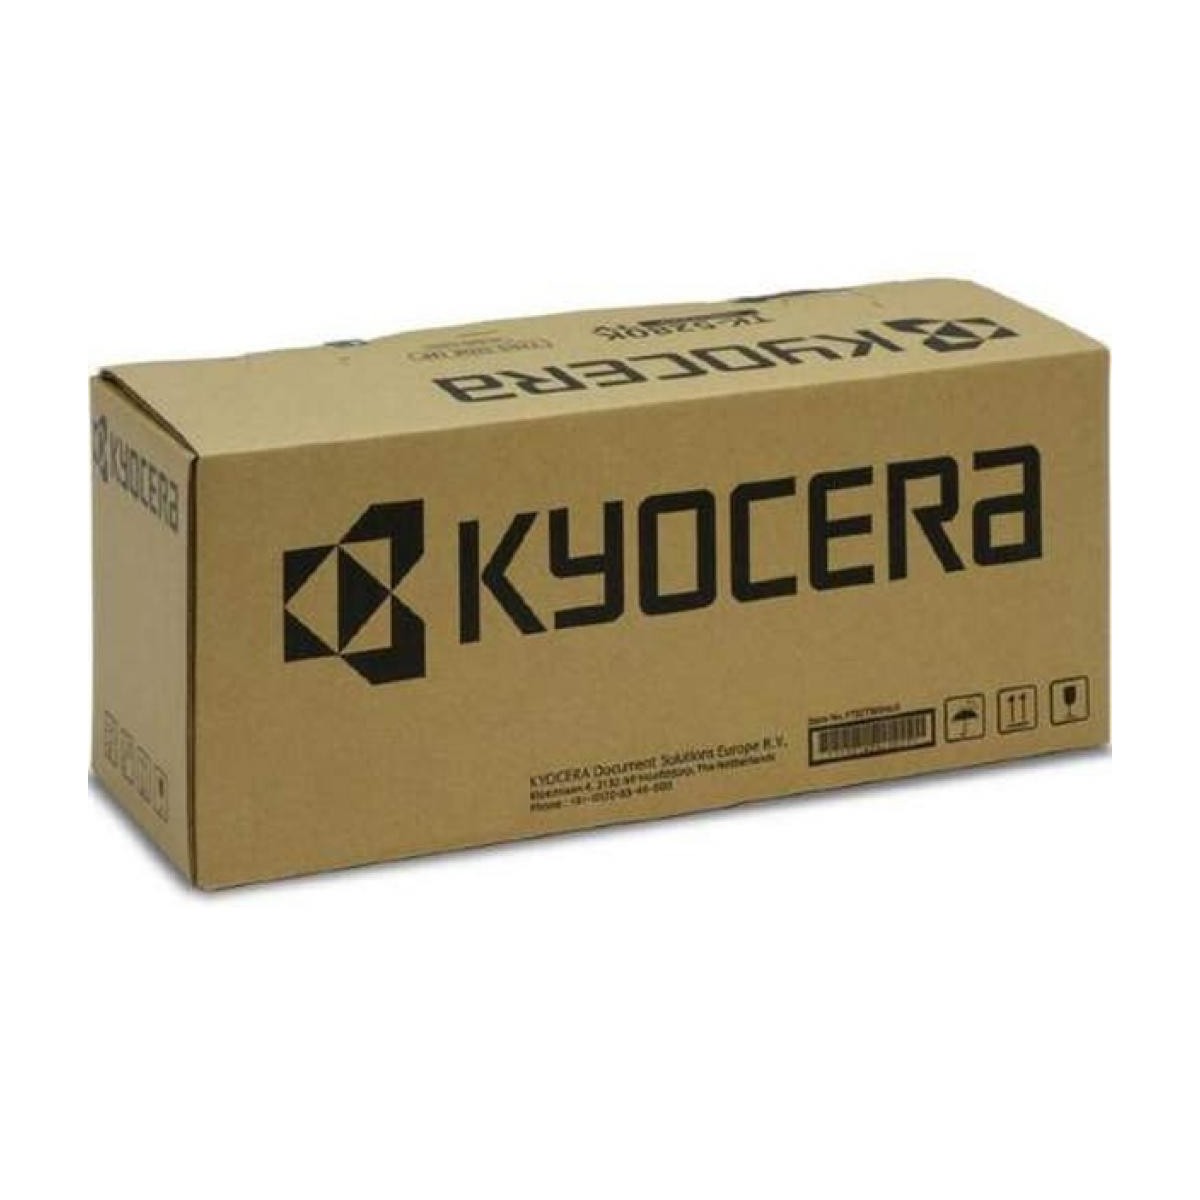 Kyocera TK-5440C Toner Cartridge 2.4K pages - Toner Cartridge